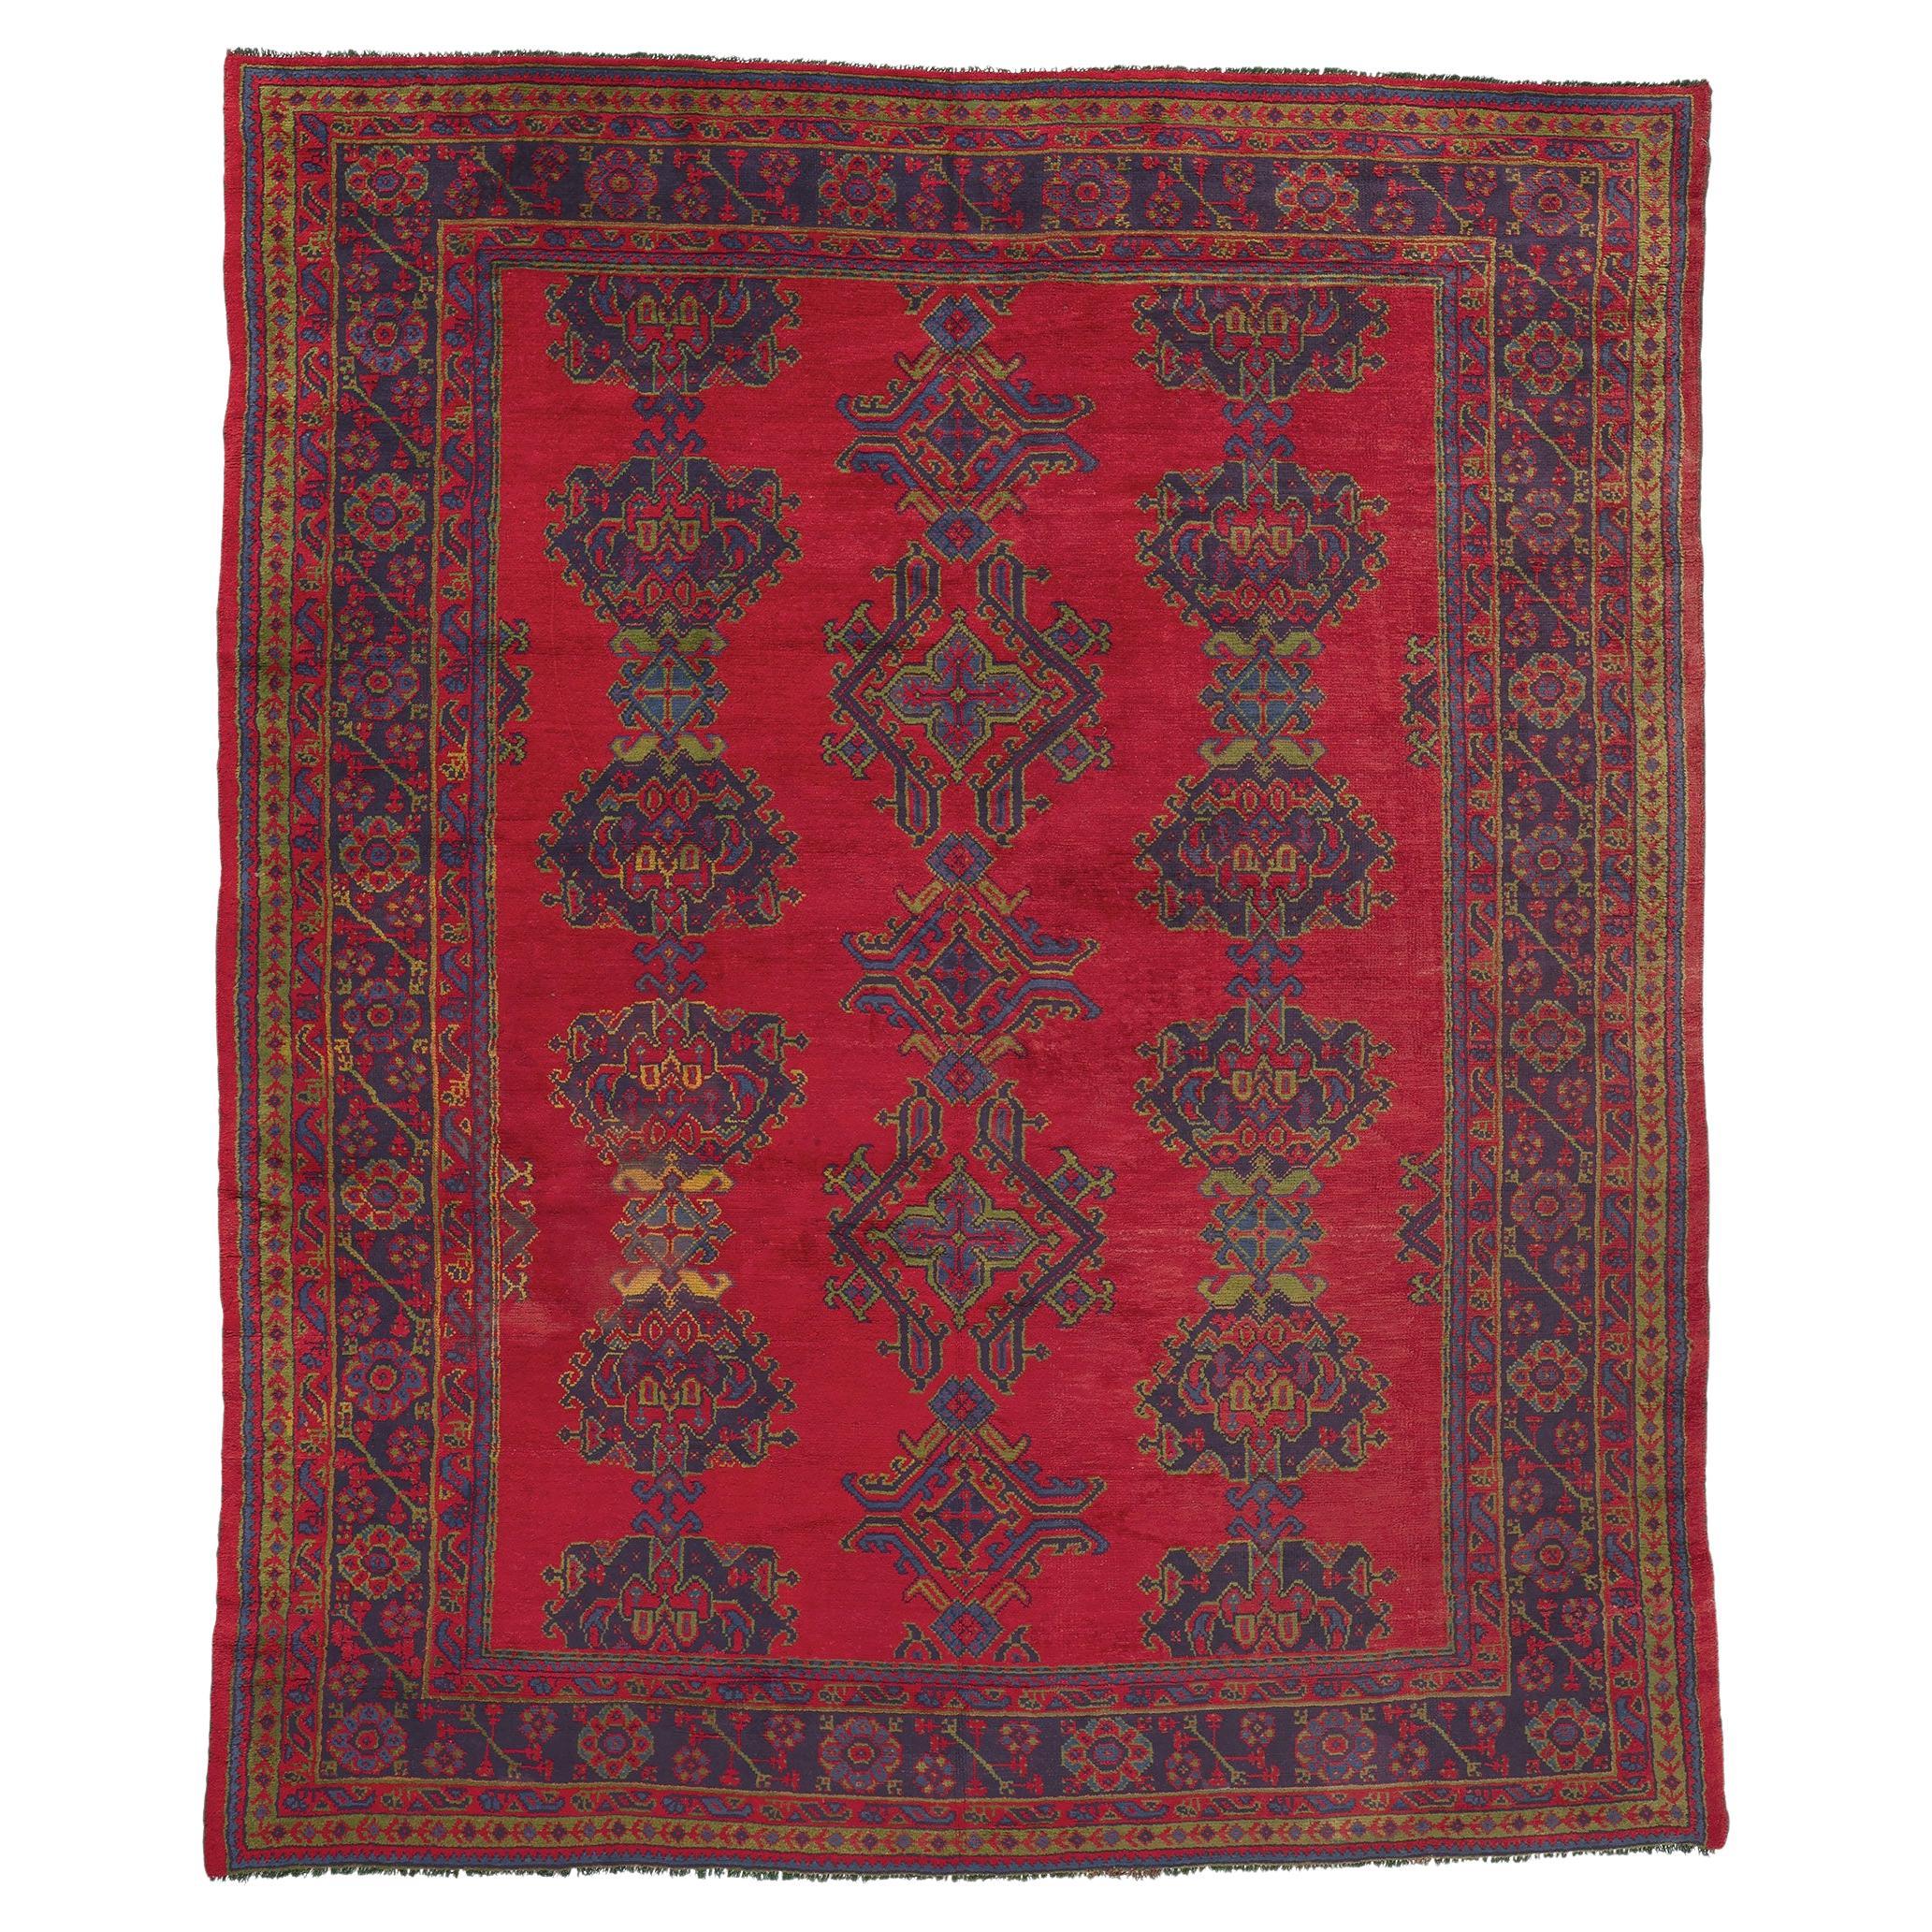 Antique Red Turkish Oushak Rug For Sale